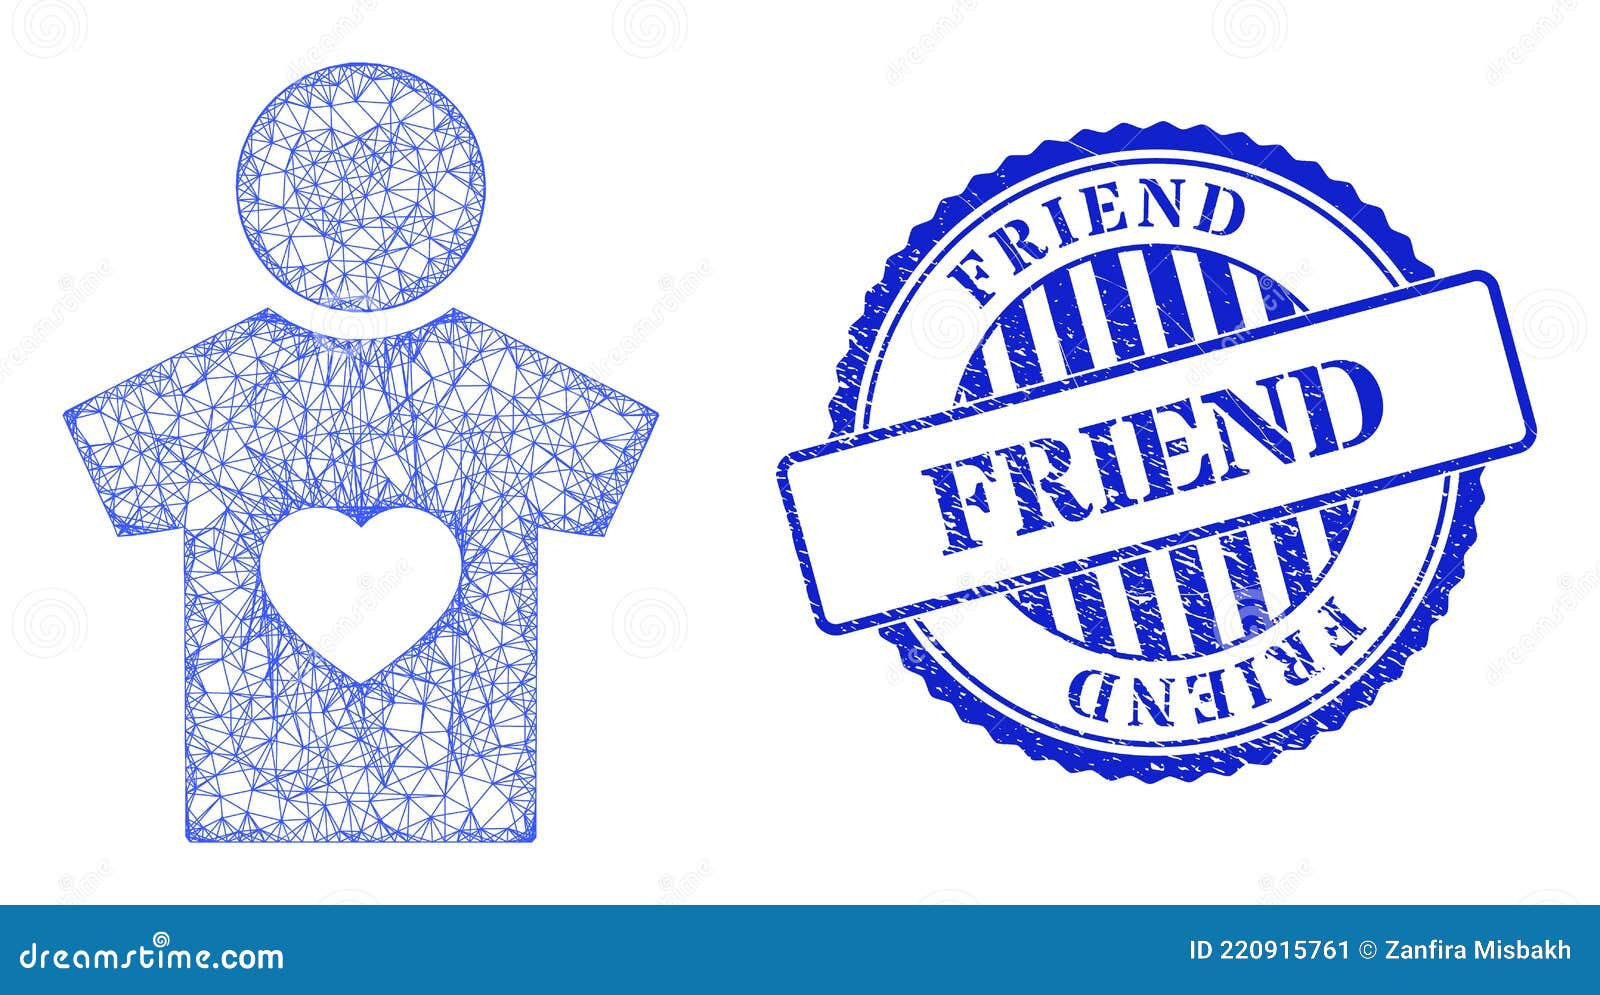 rubber friend badge and net boyfriend mesh